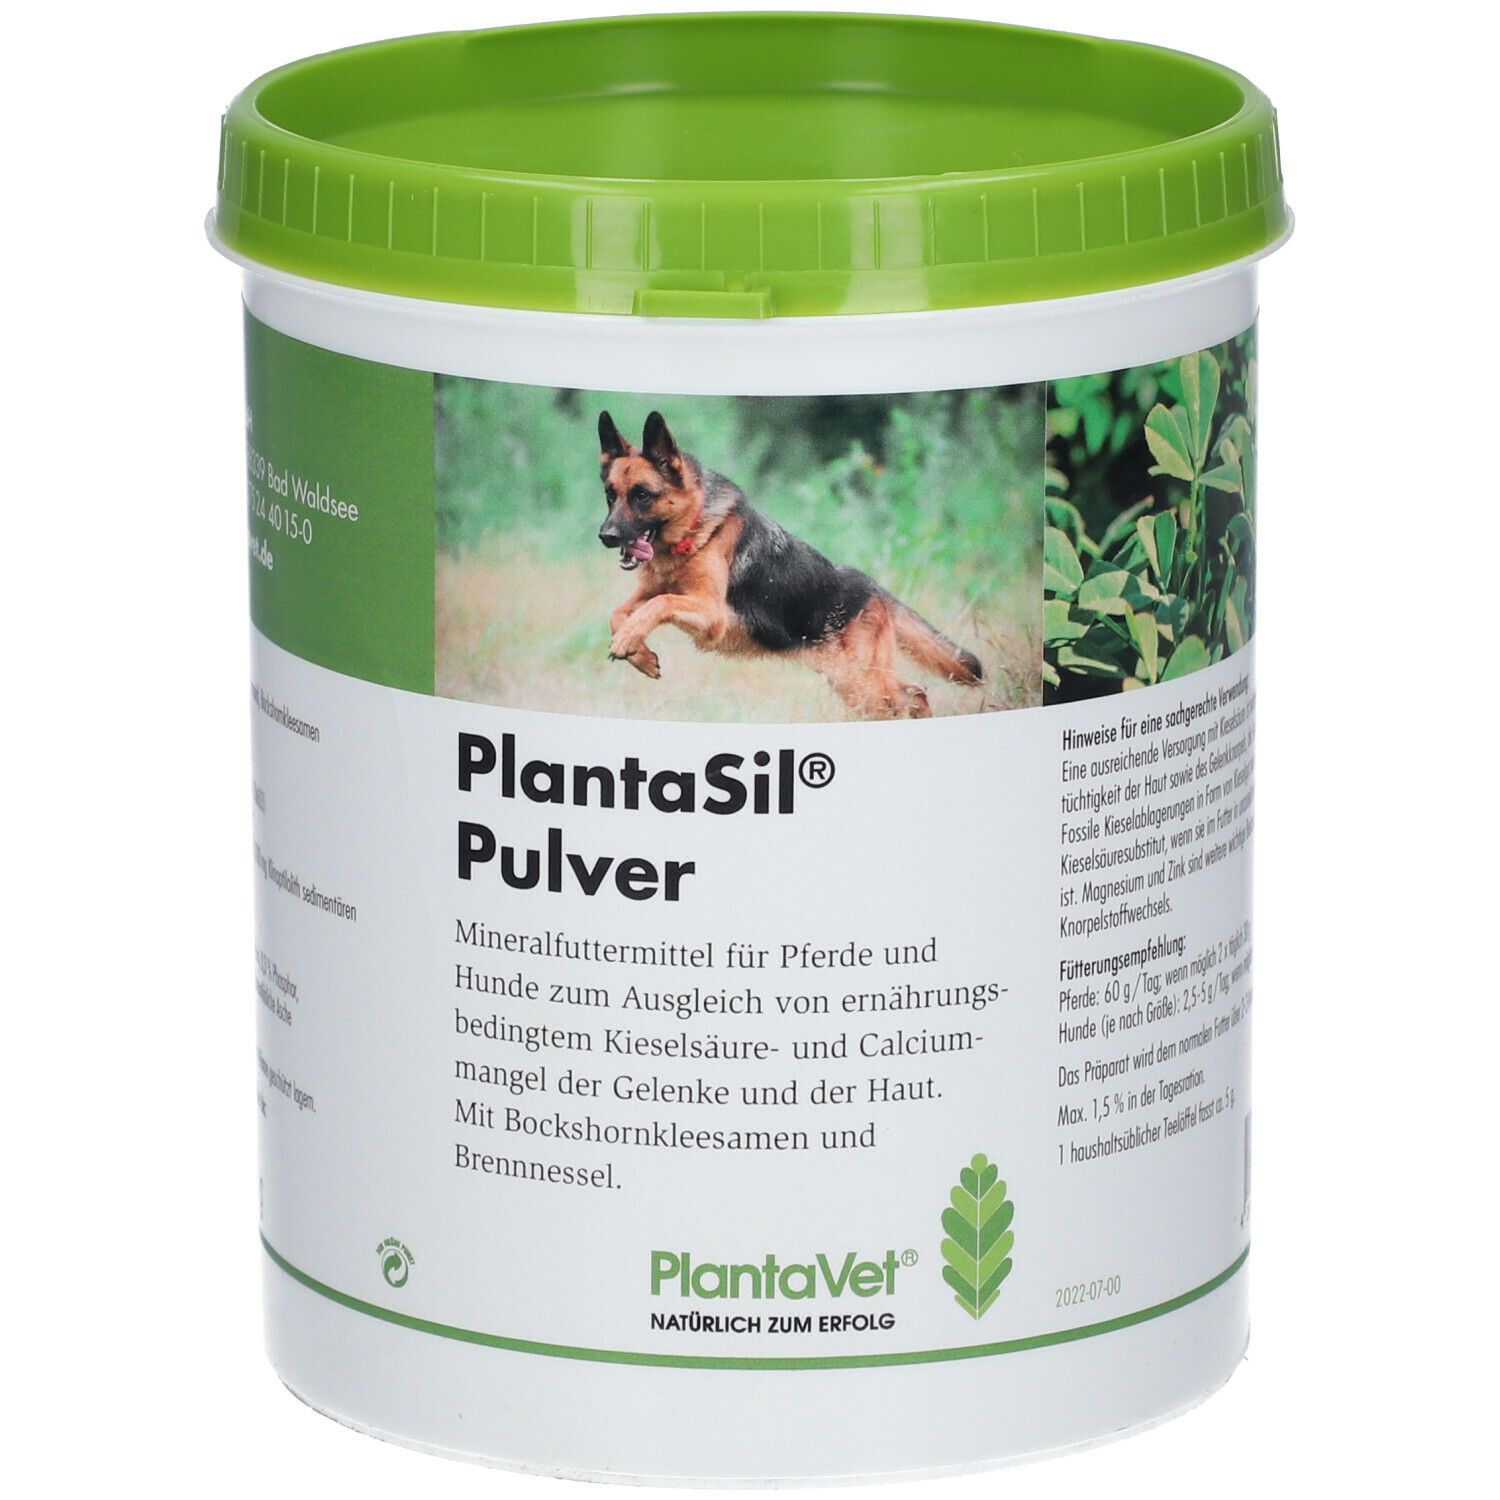 PlantaSil® Pulver 1000 g shop-apotheke.com